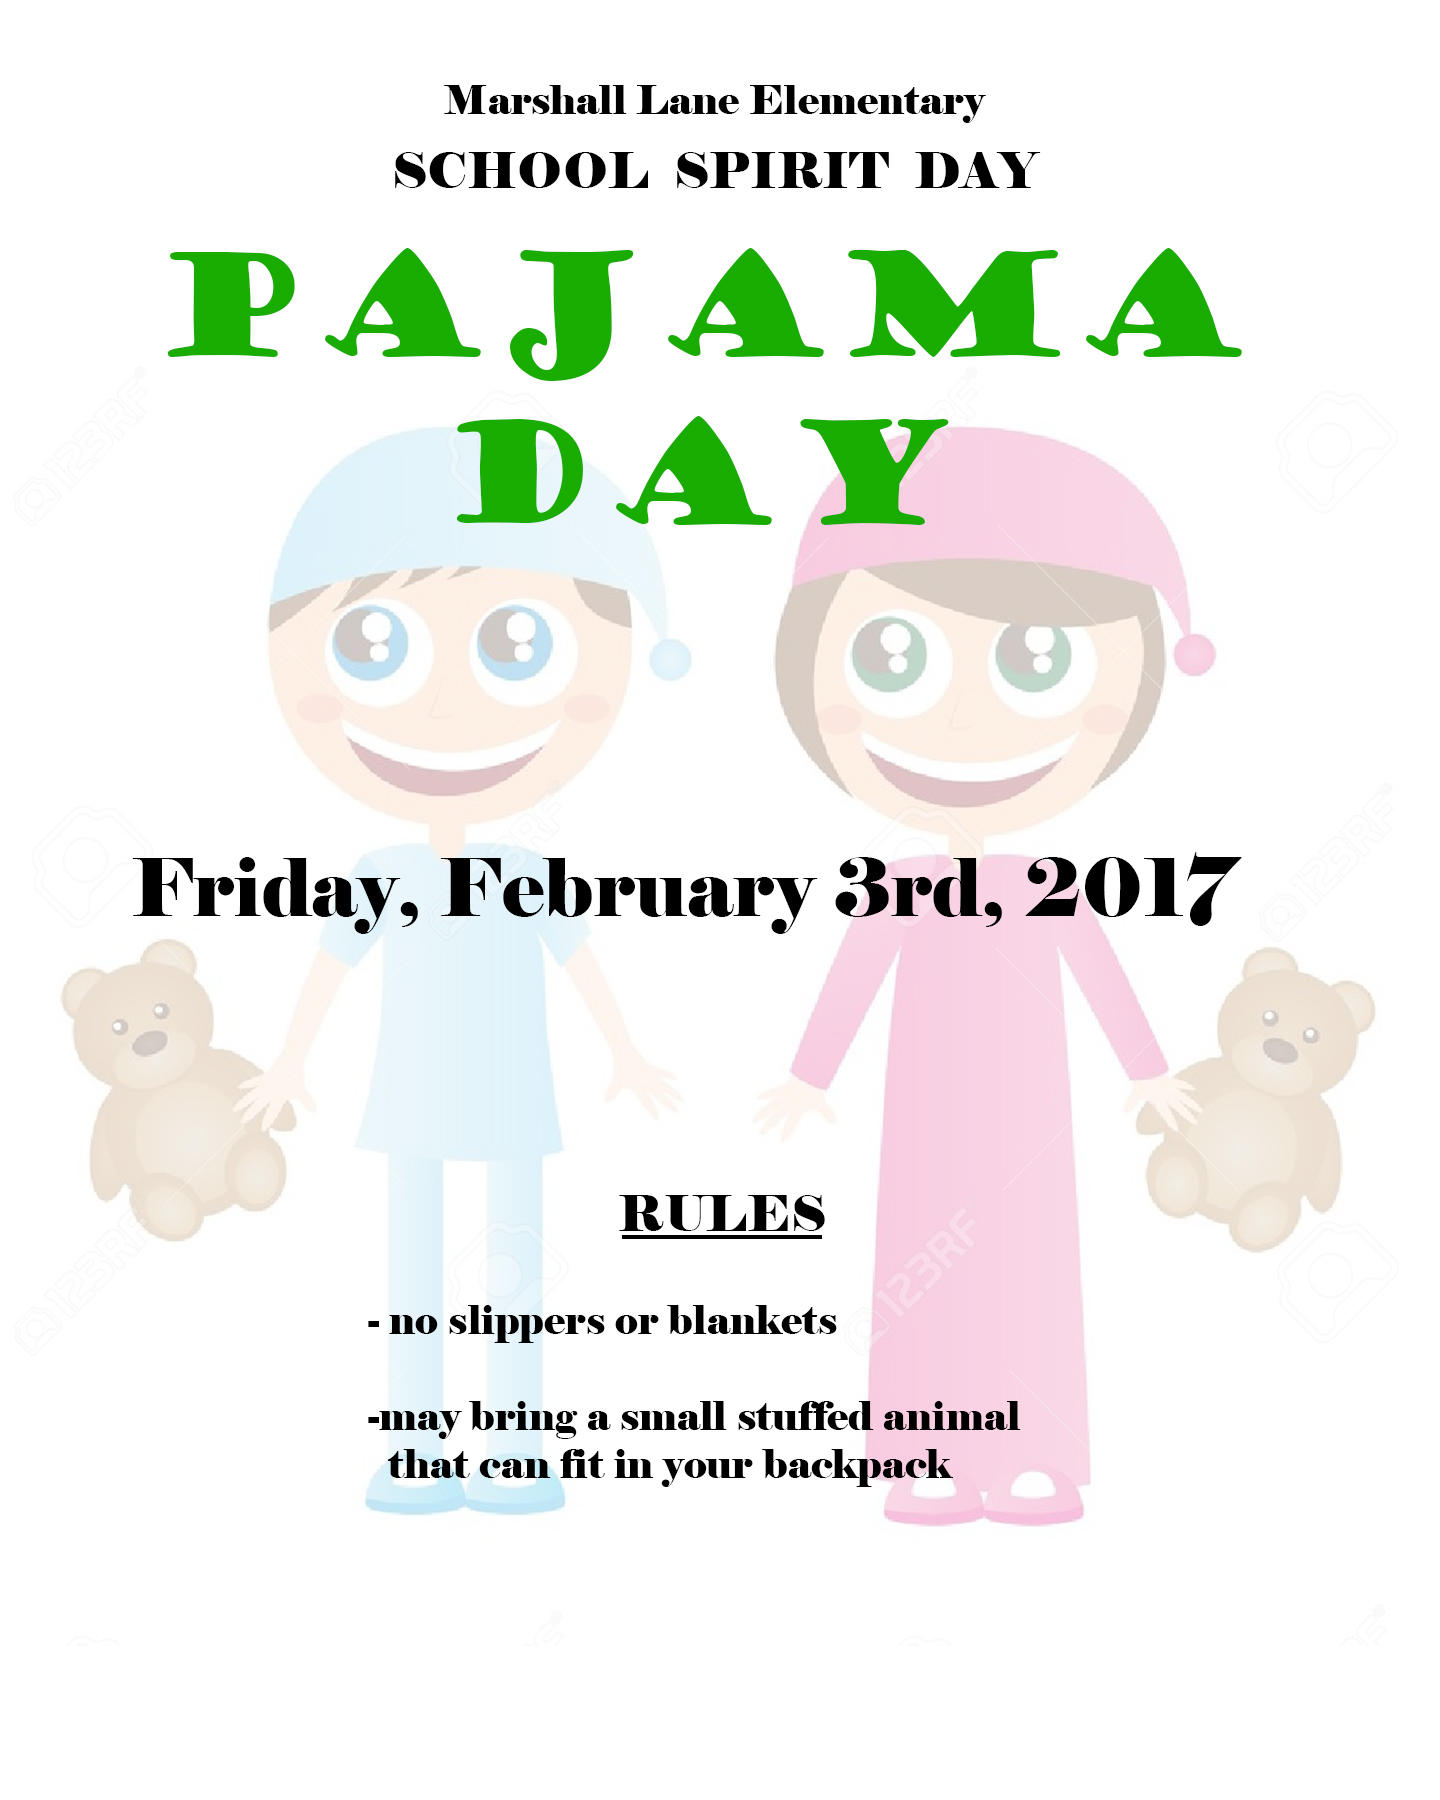 Pajama Day! Marshall Lane Elementary School